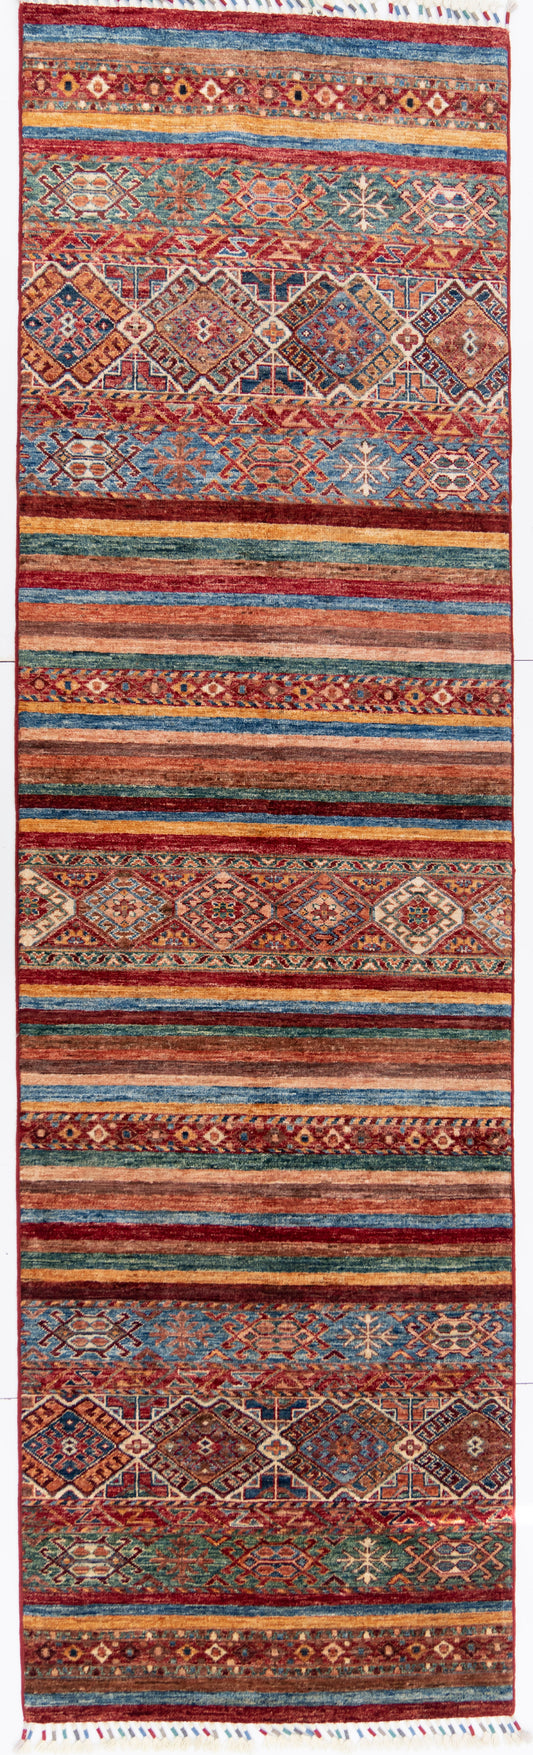 Stripy Multicoloured Ariana Rubin Runner Carpet with Multicoloured Tassels